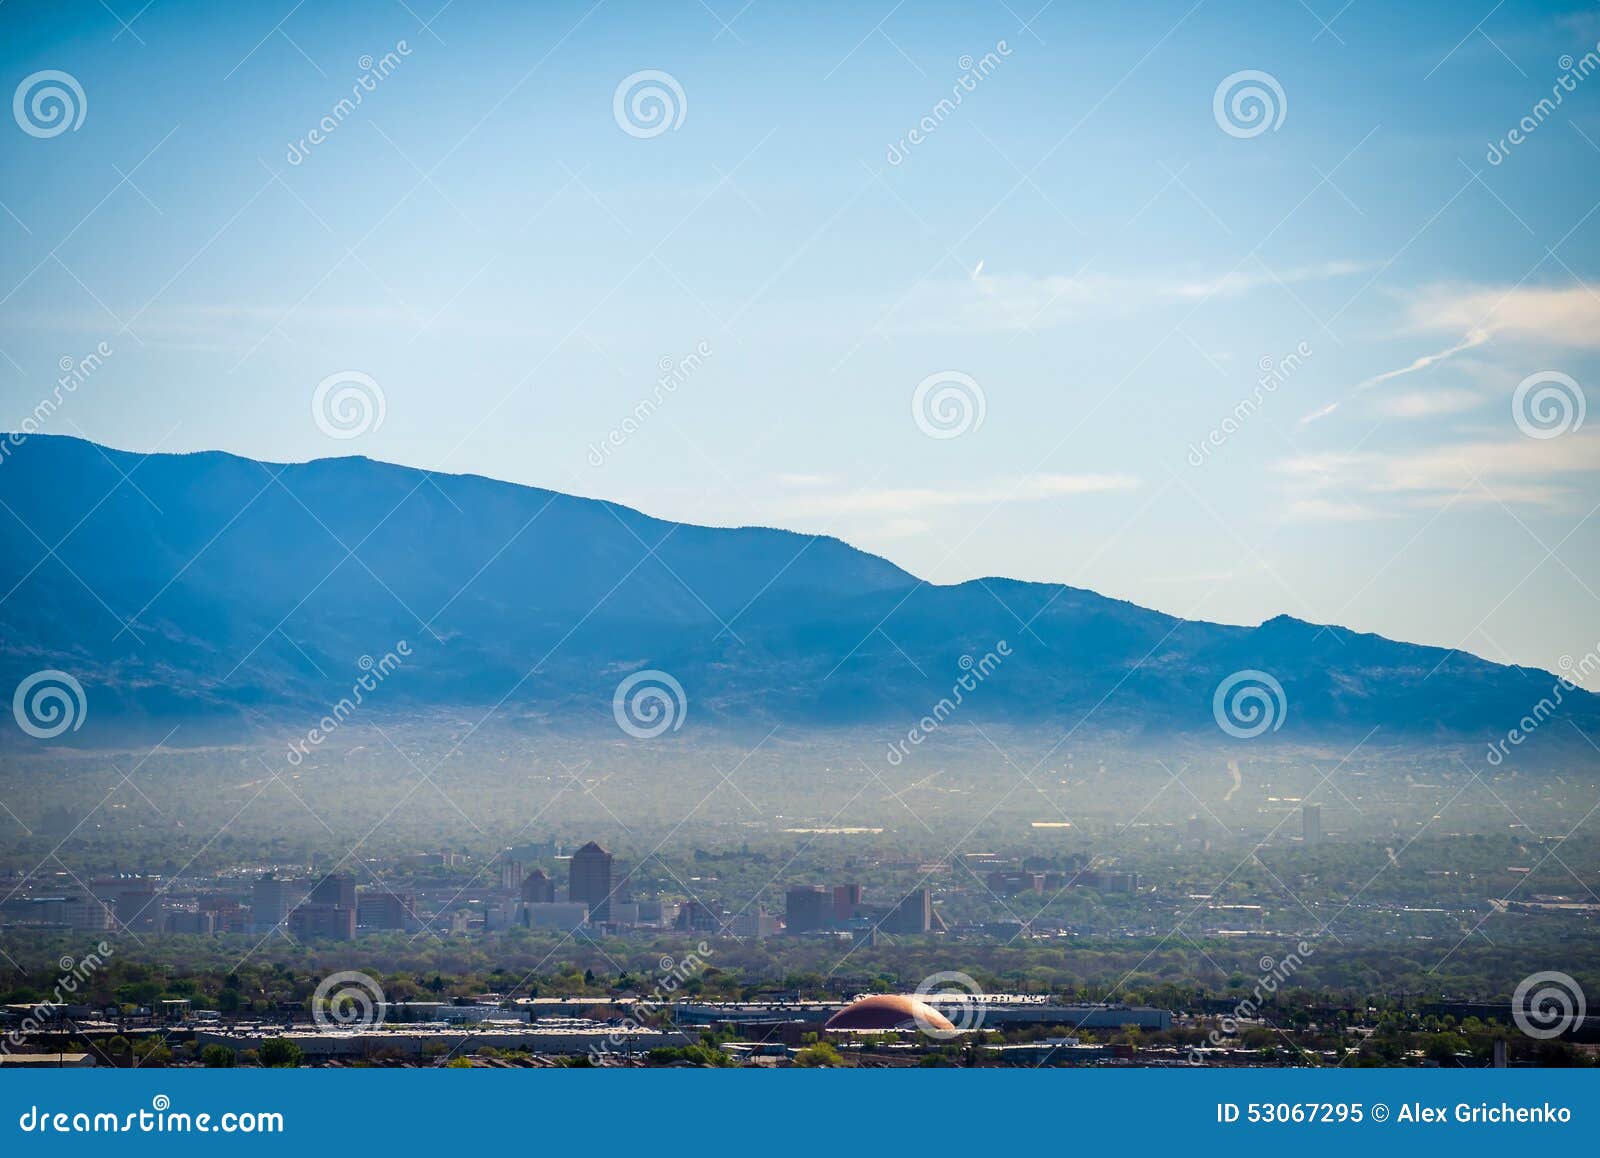 albuquerque new mexico skyline in smog with mountains